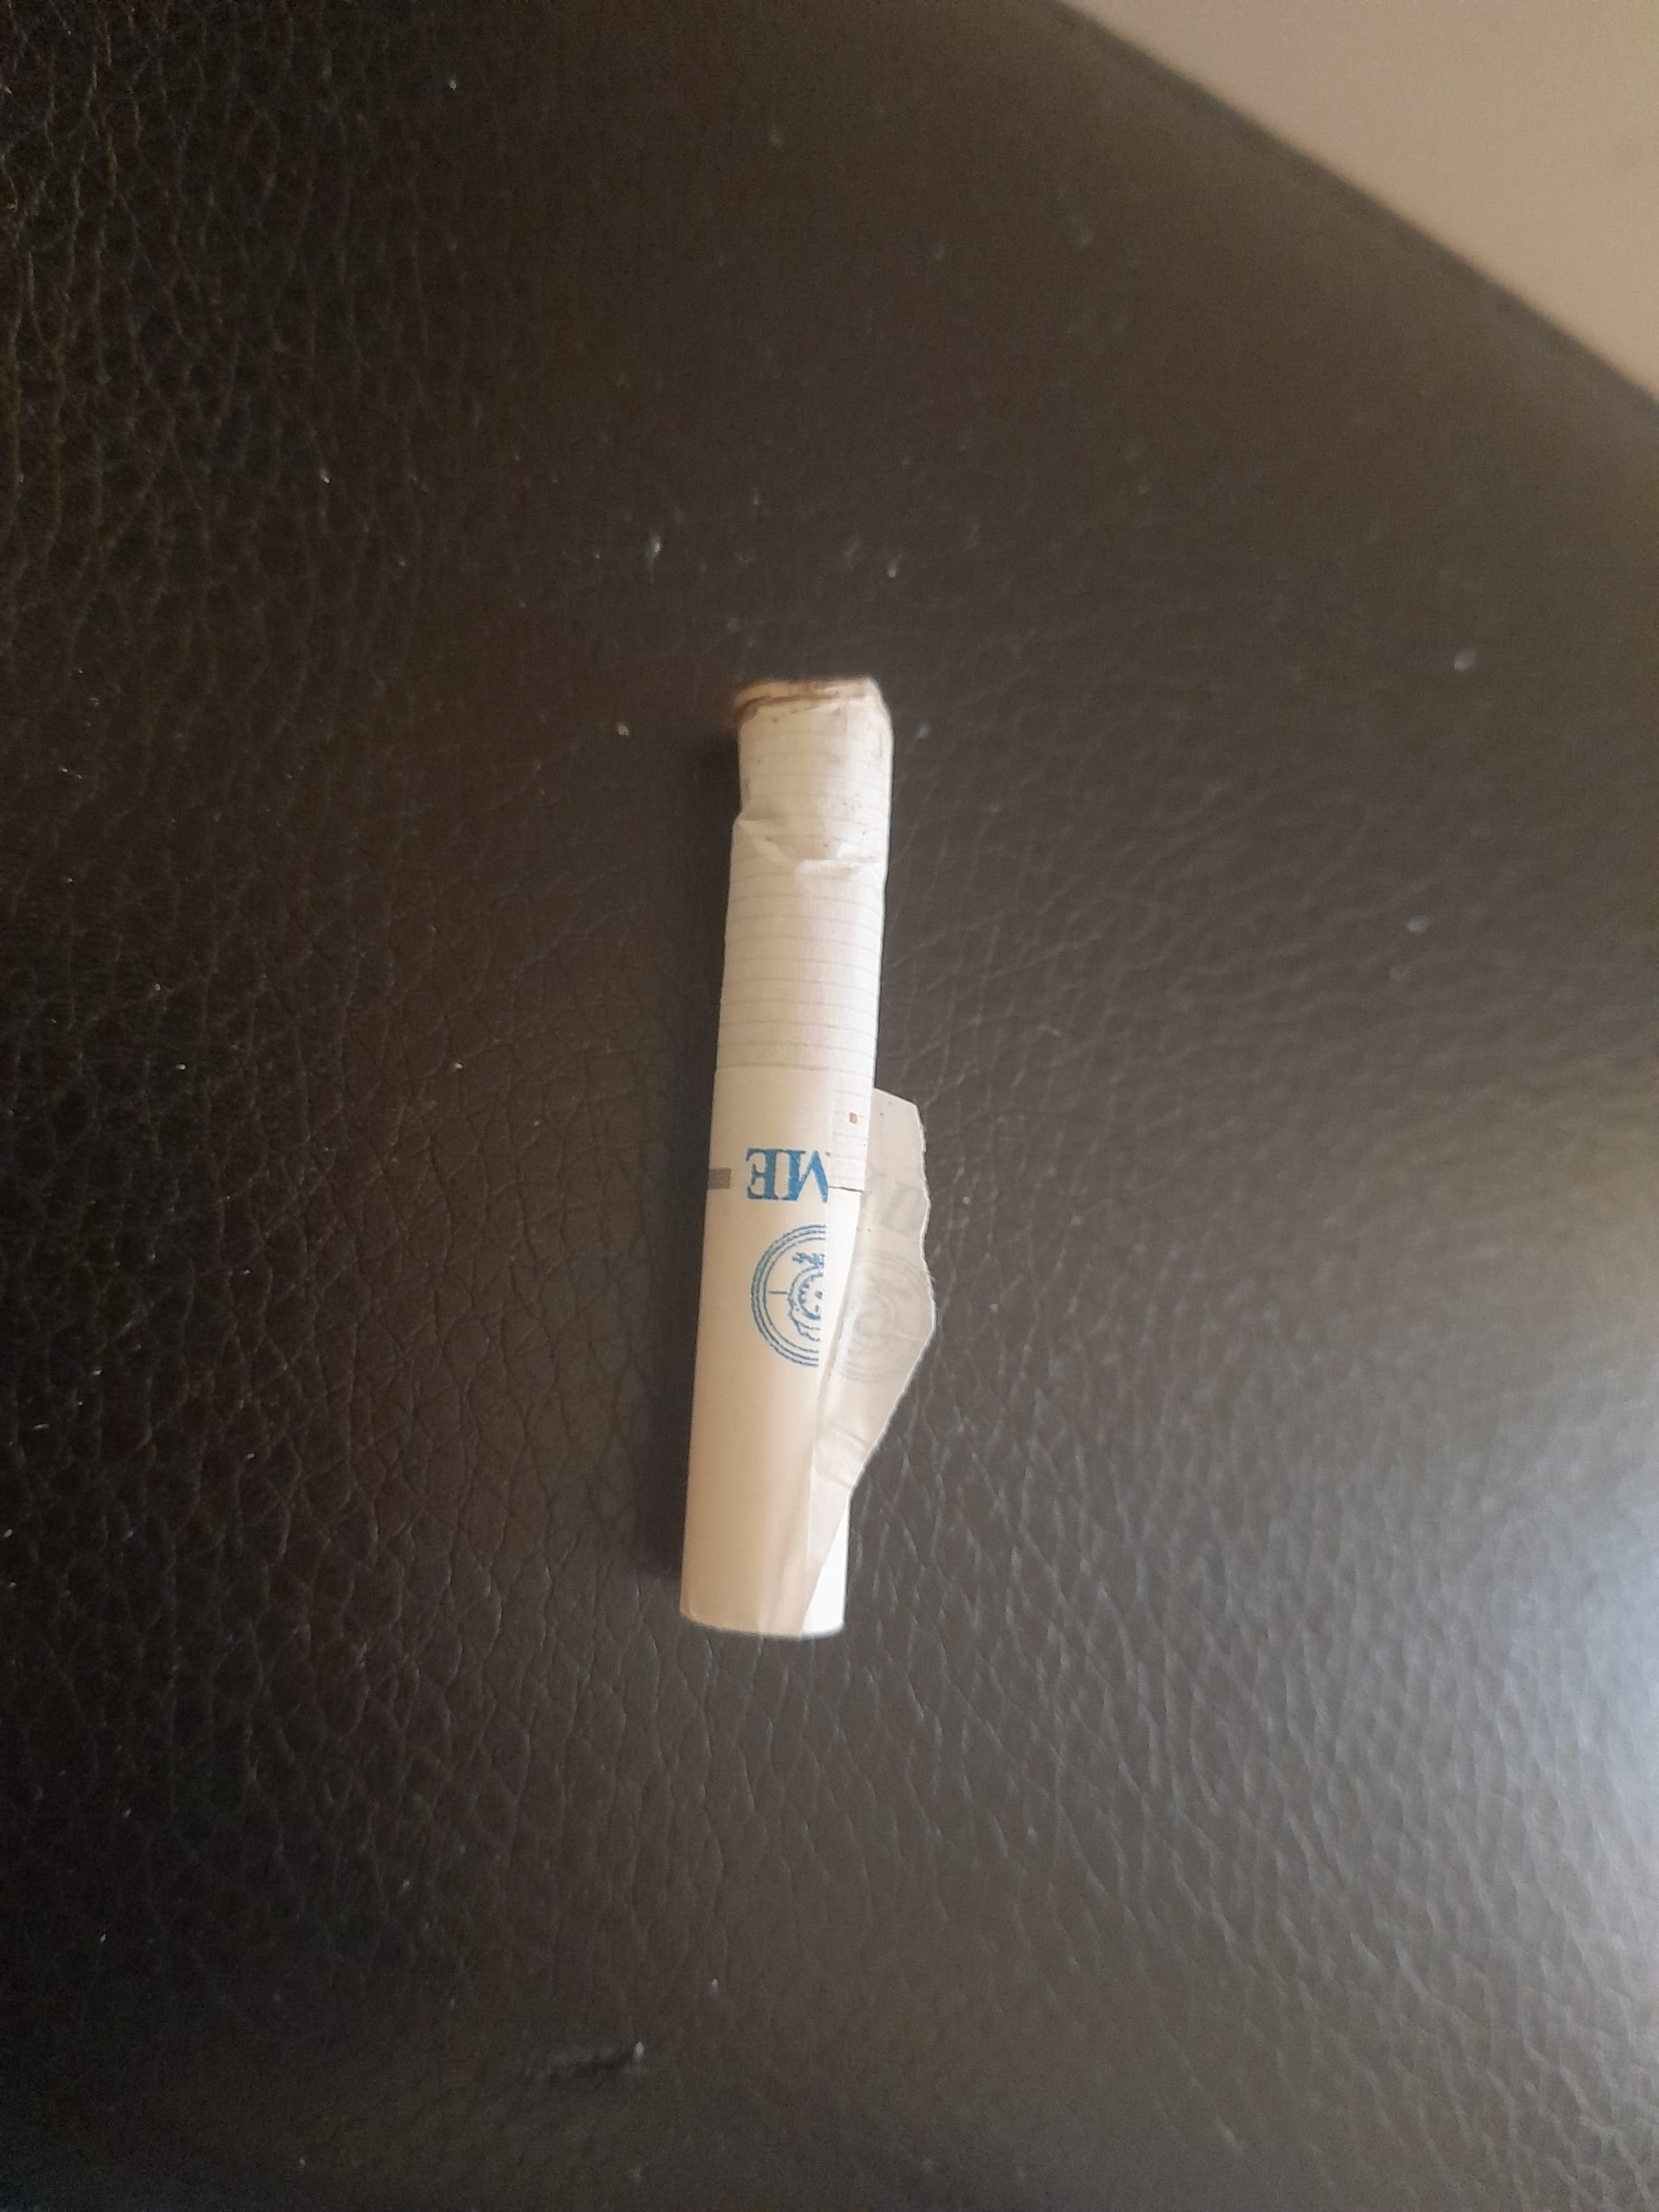 John Player Cigarettes complaint Paper around filter